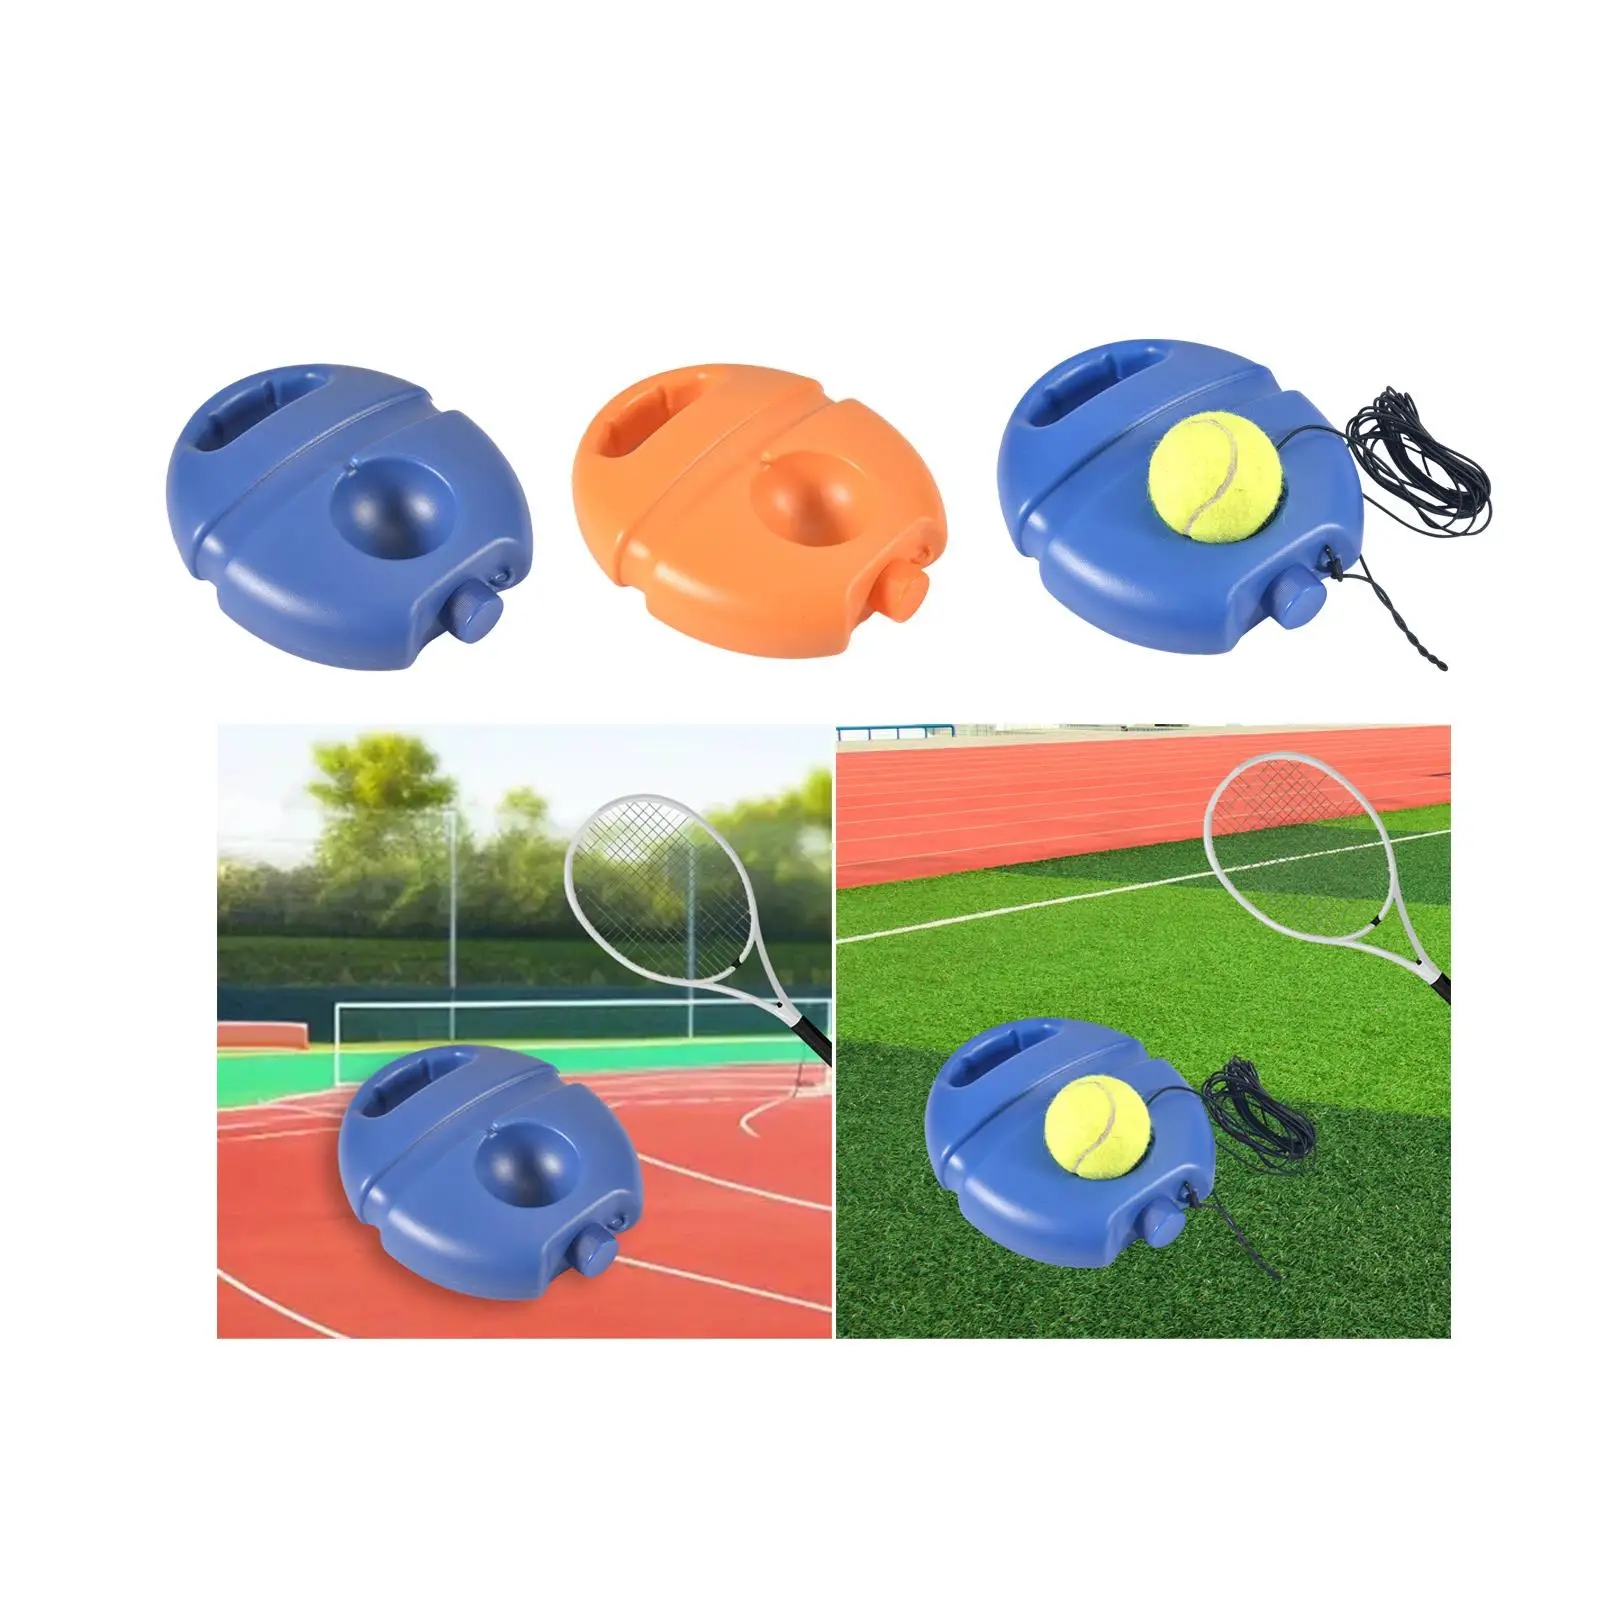 Tennis Trainer Base, Single Player Pickleball Trainer Base, Tennis Training Supplies for Kids Adults Outdoor Indoor, Durable